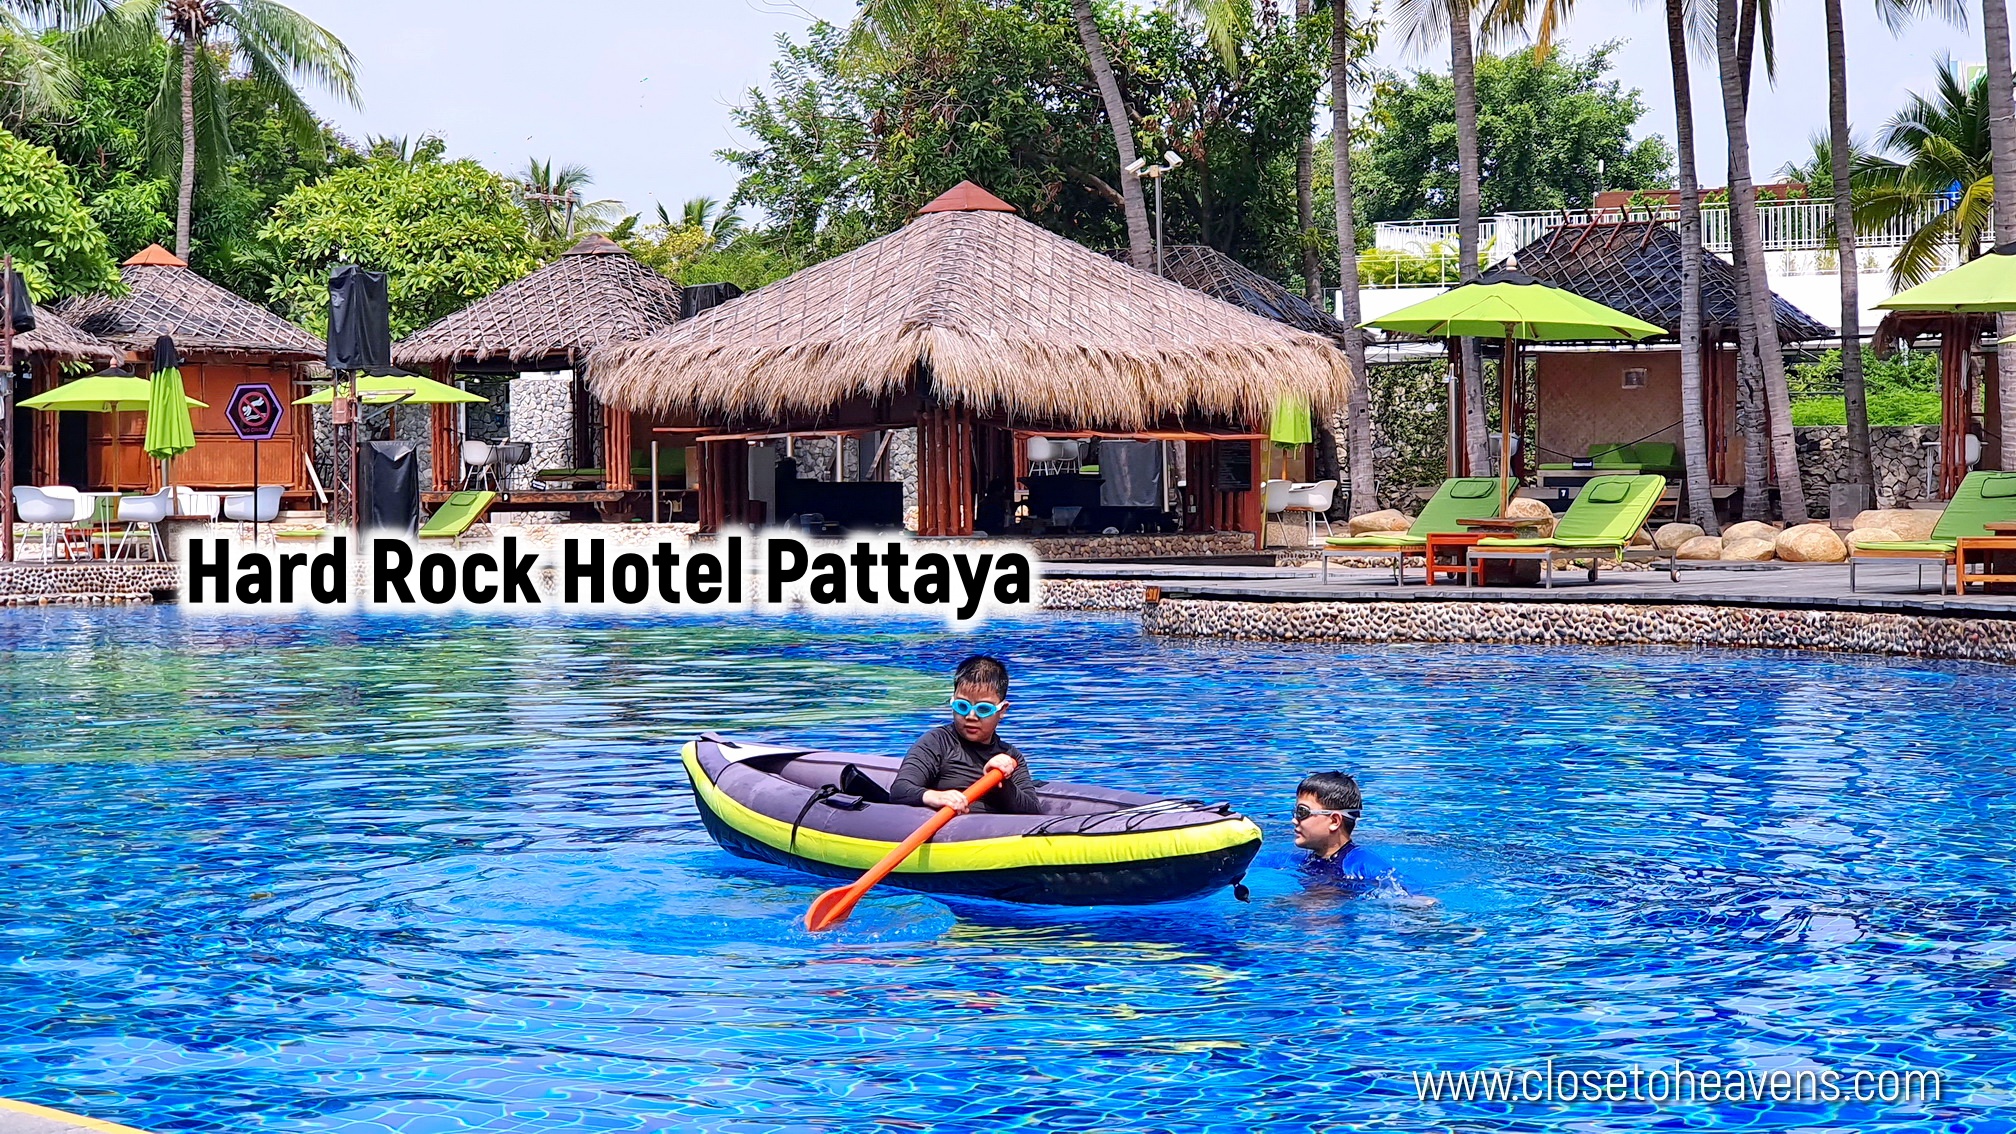 Hard Rock Hotel Pattaya รีวิวที่พัก & อาหารเช้า - Close To Heaven